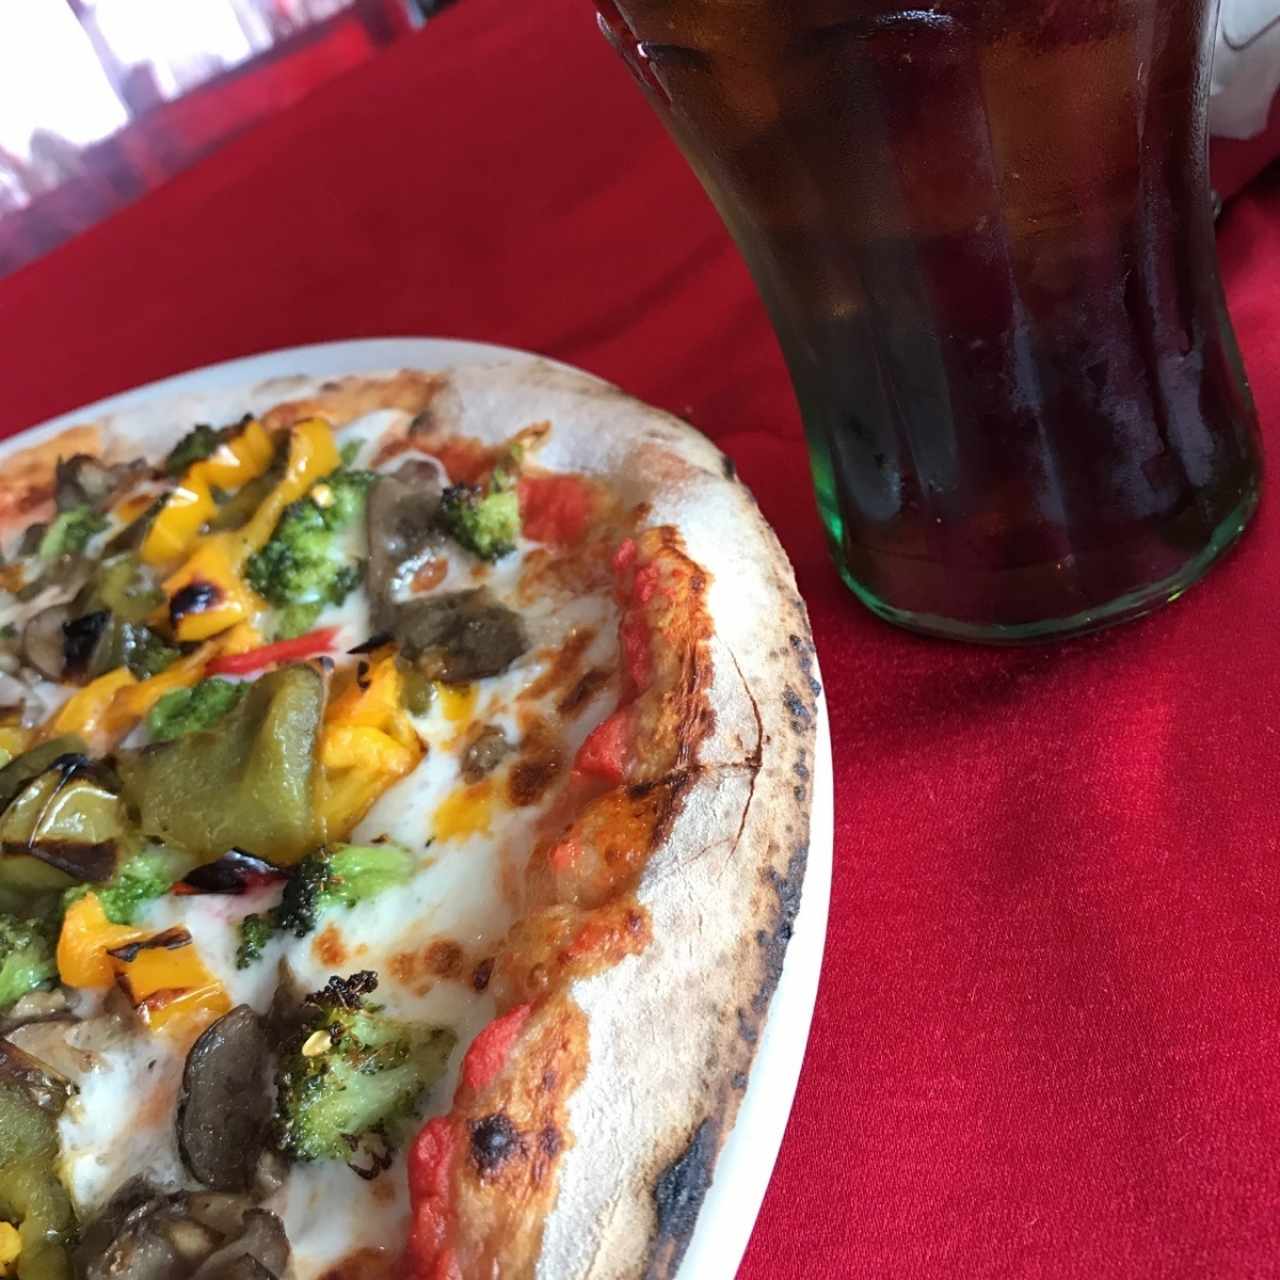 Pizzas - Pizza vegetariana